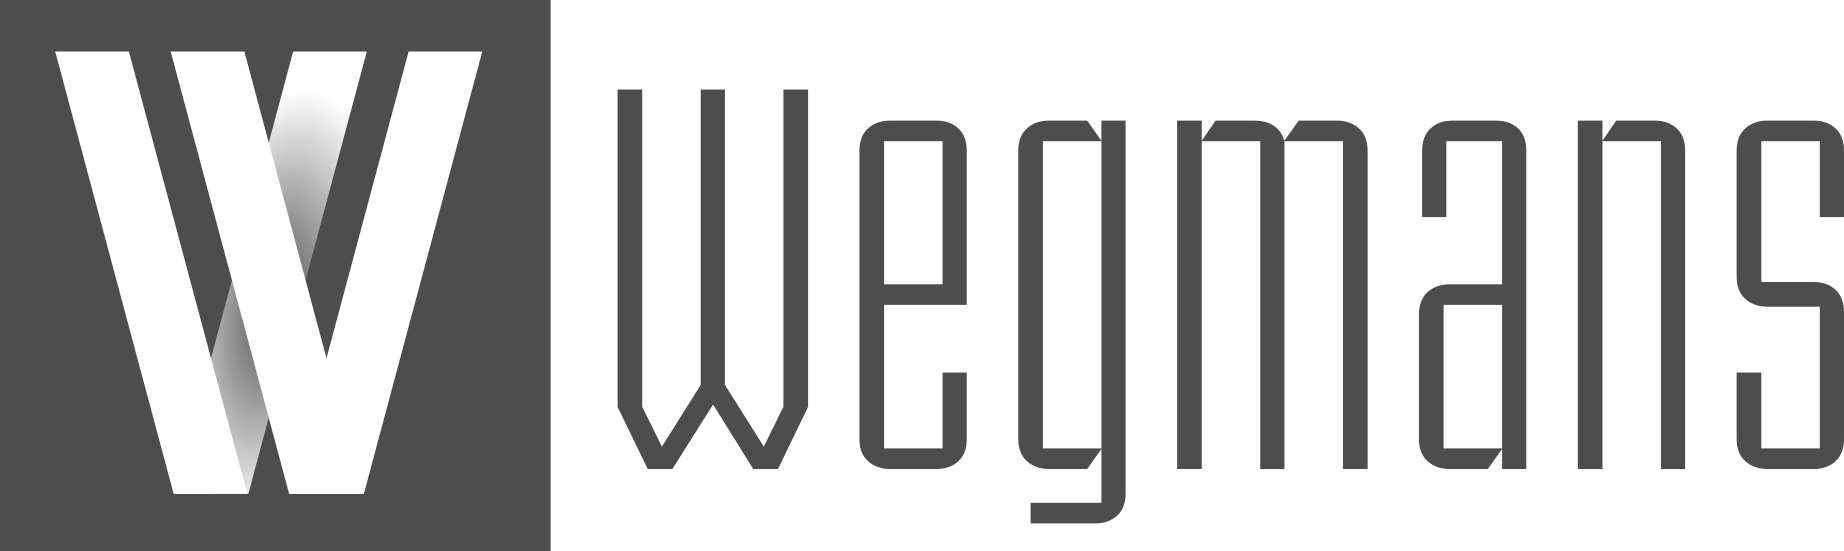 Wegmans (Lammari) | Logofanonpedia | FANDOM powered by Wikia